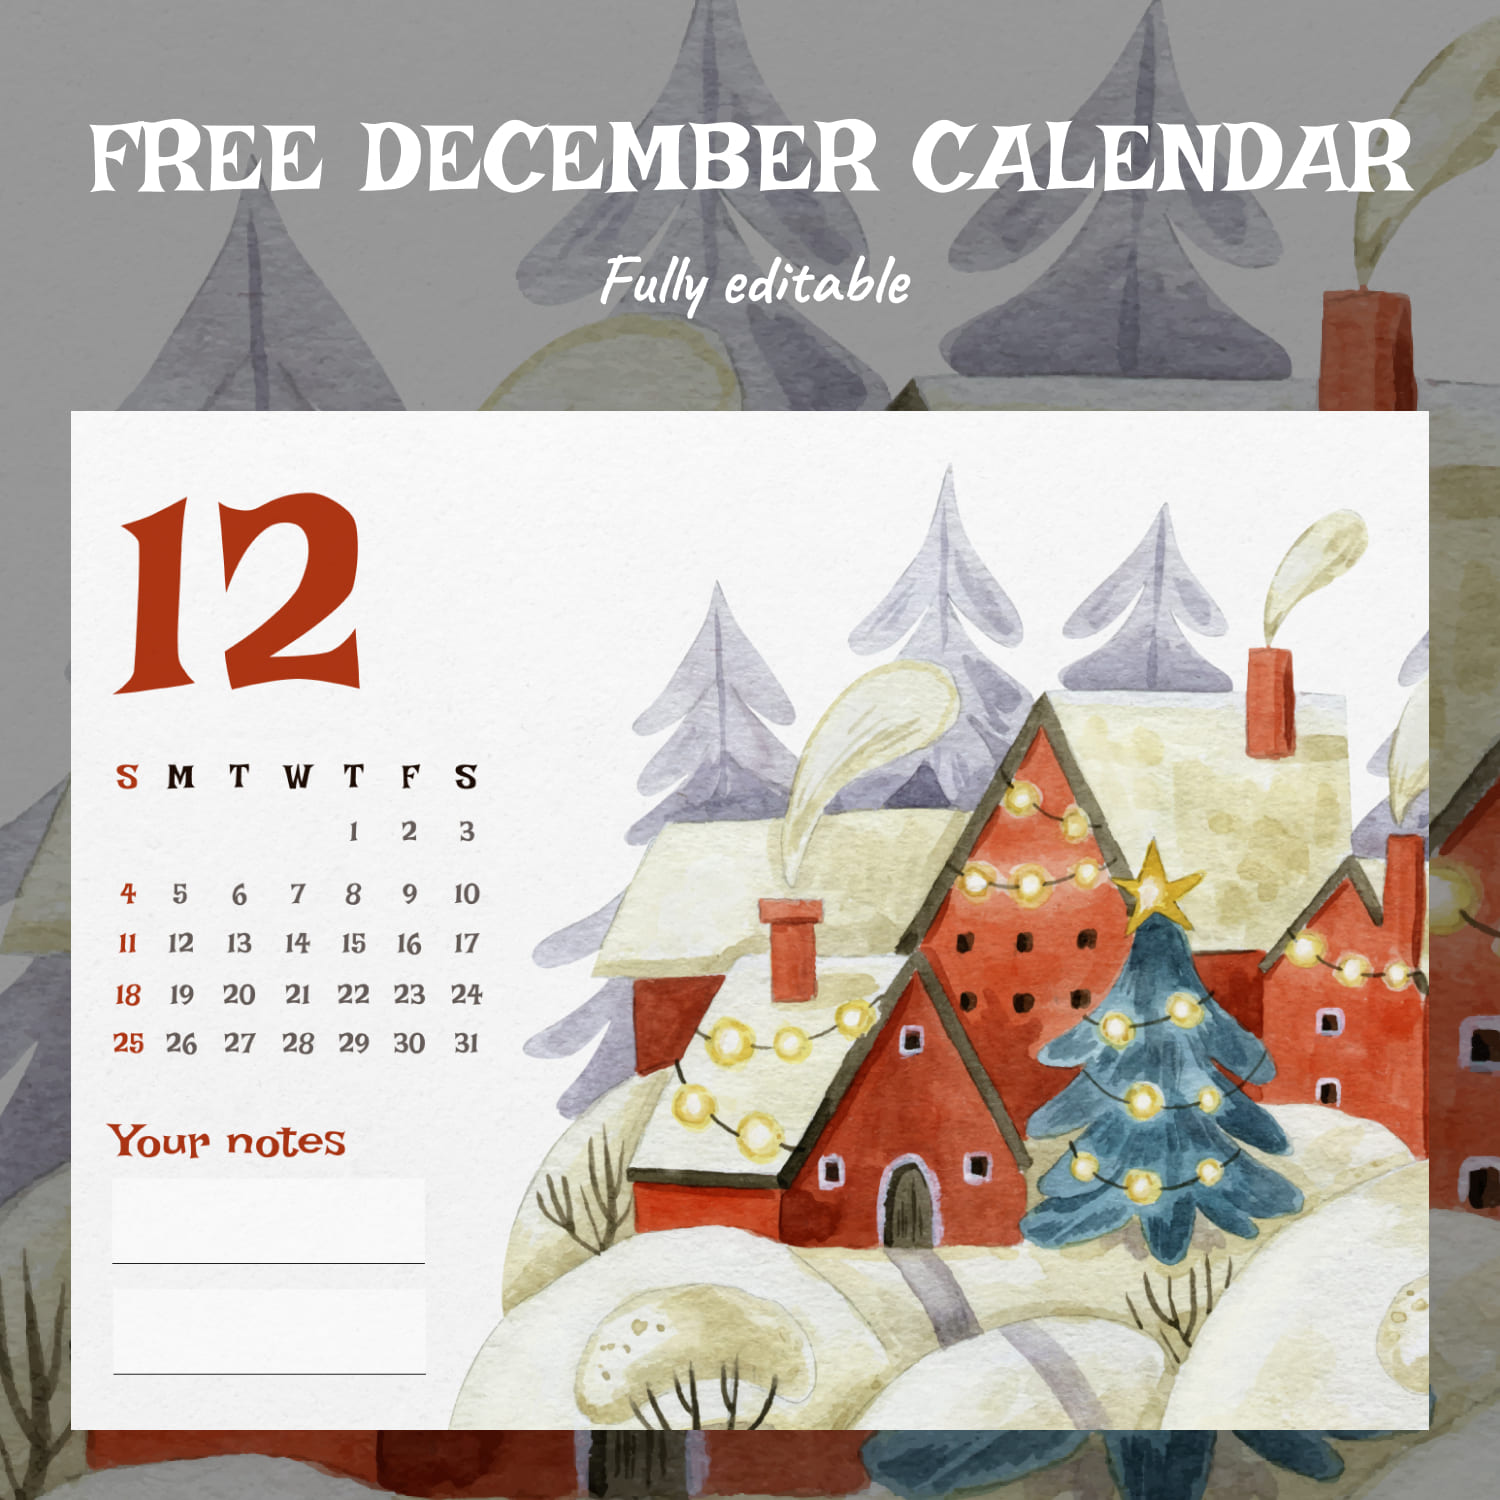 Free December Calendar.